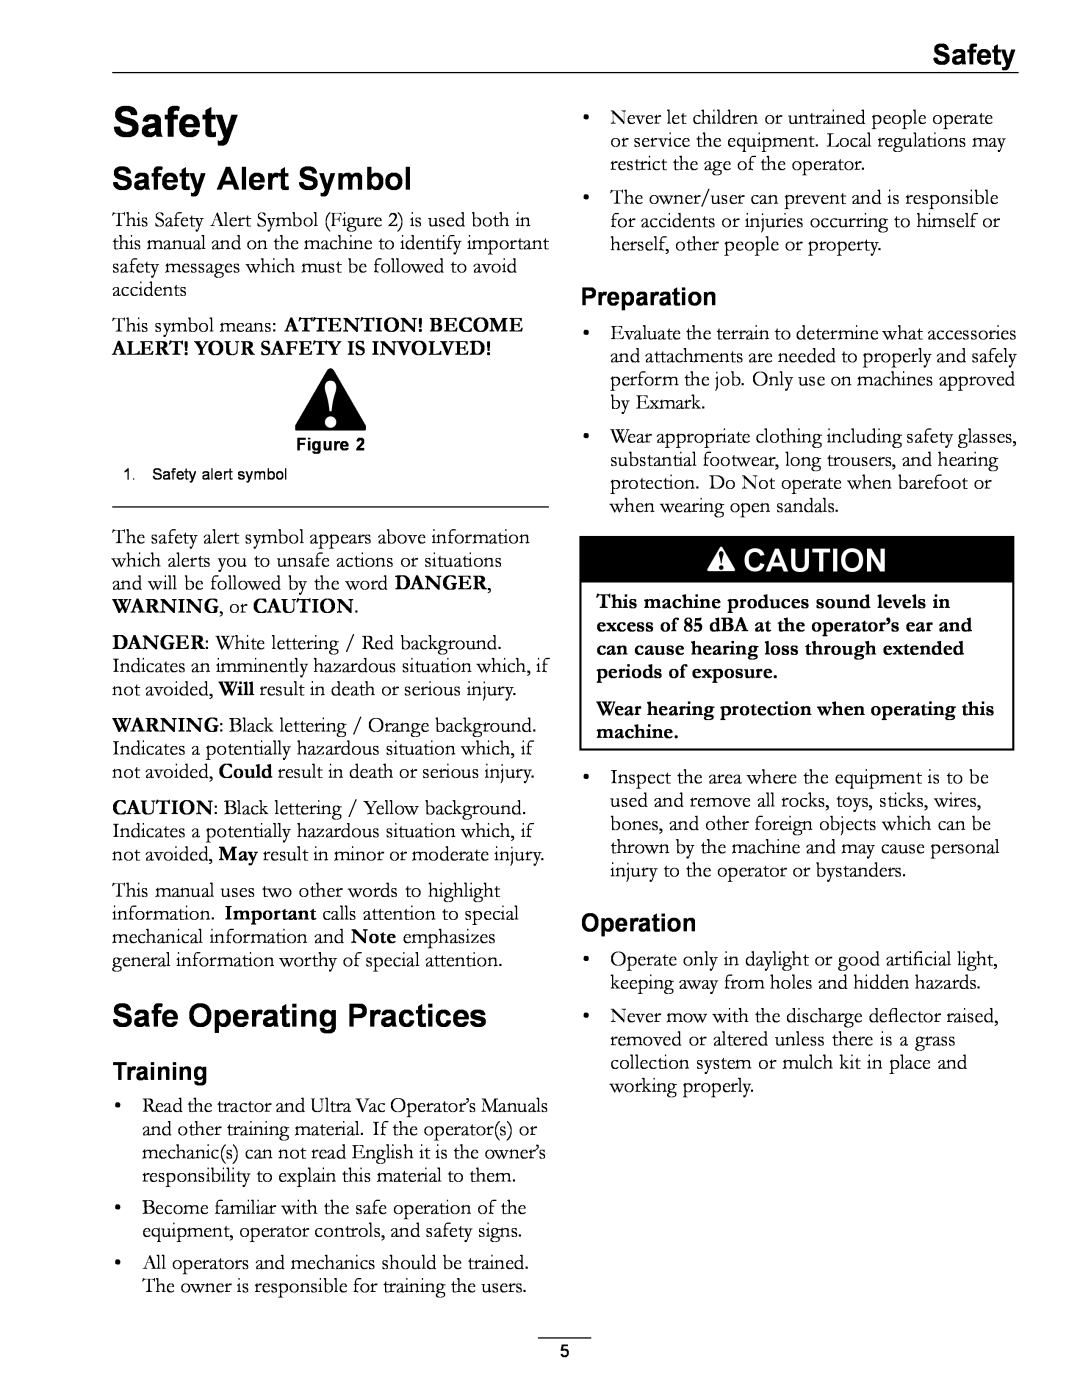 Exmark LAZER AS manual Safety Alert Symbol, Safe Operating Practices, Training, Preparation, Operation 